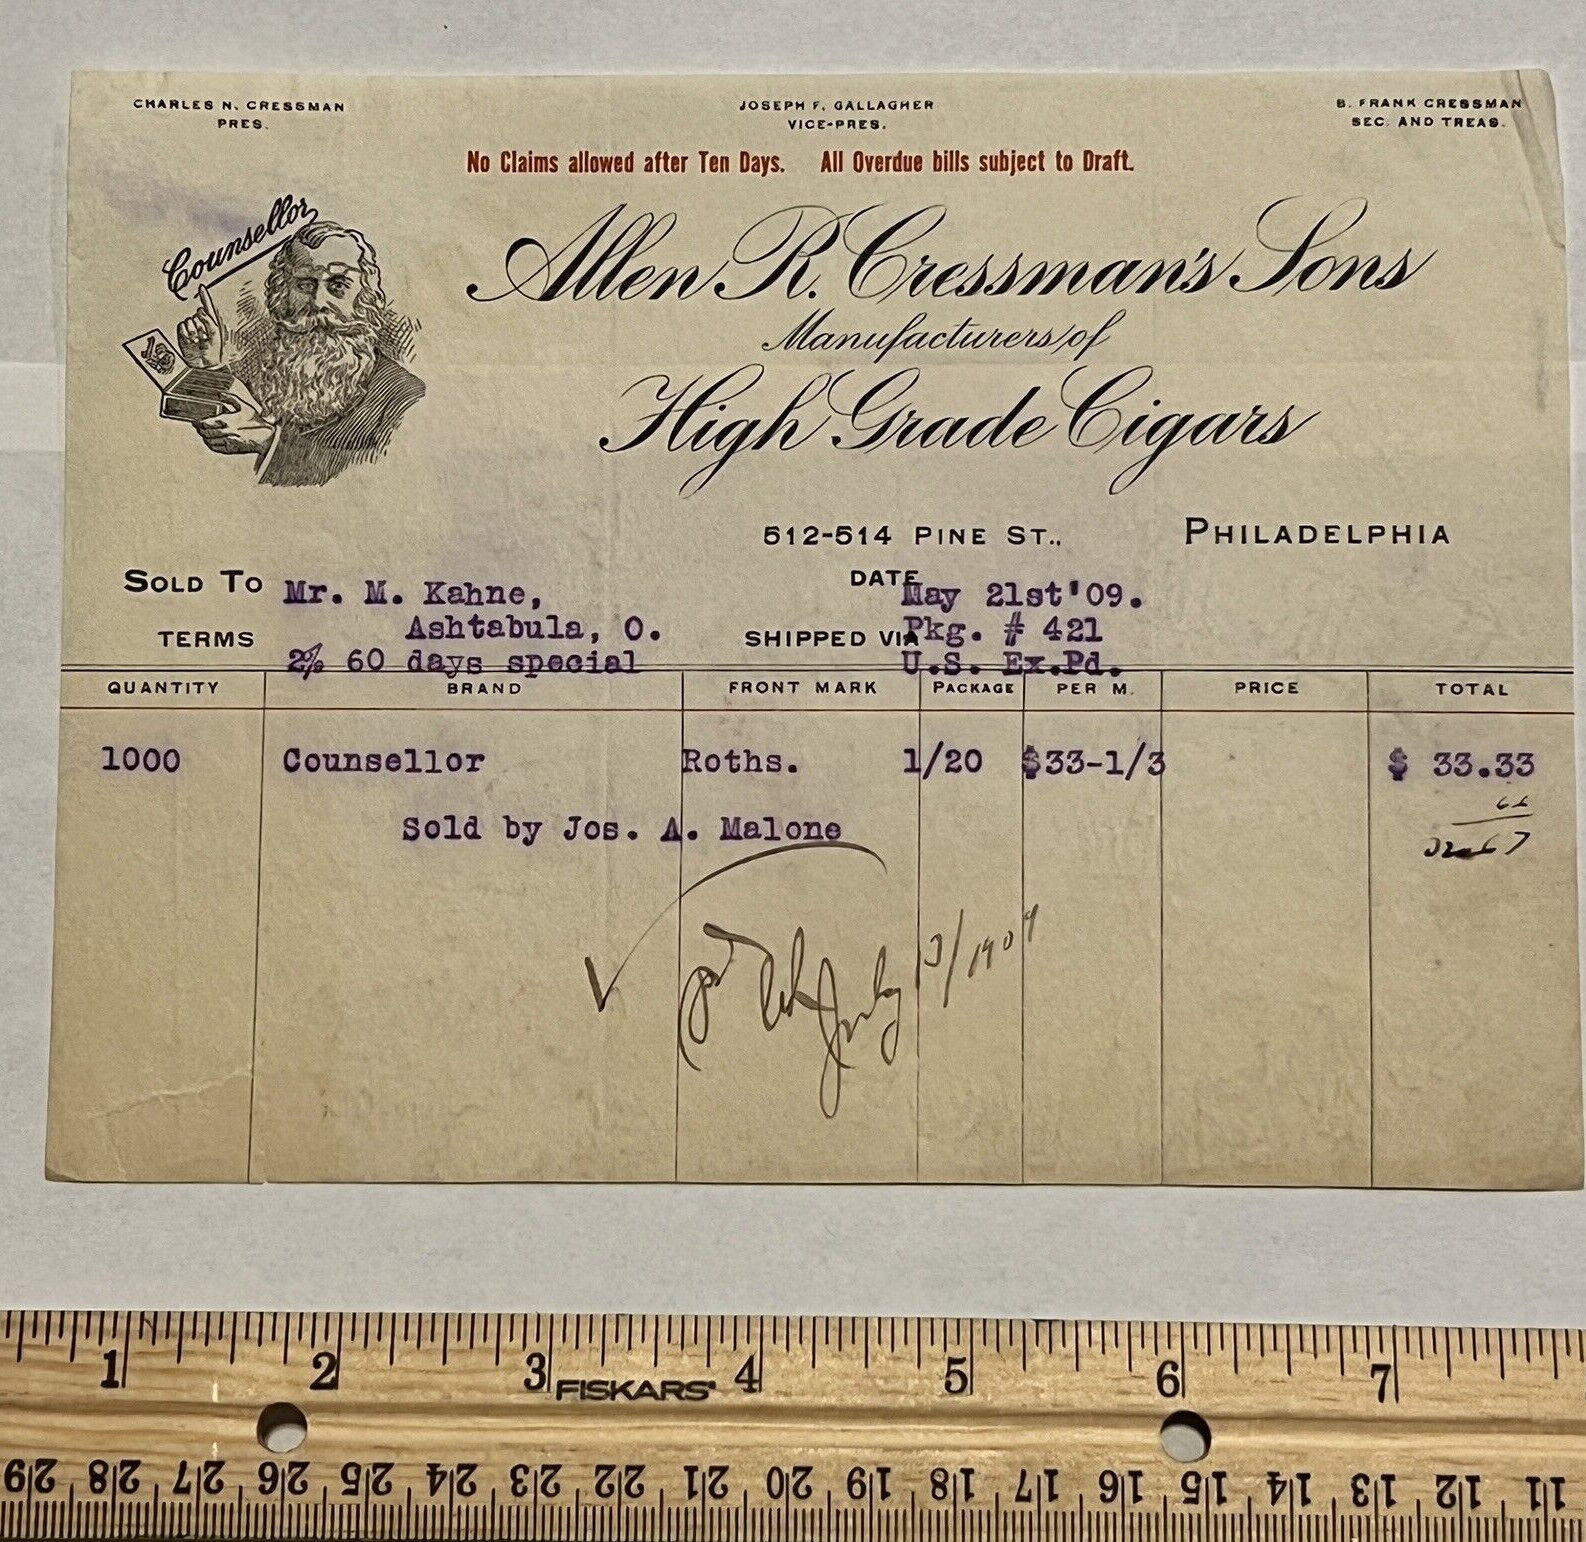 1909 ALLEN R. CRESSMAN\'S SONS HIGH GRADE CIGARS RECEIPT FOR COUNSELLOR CIGARS